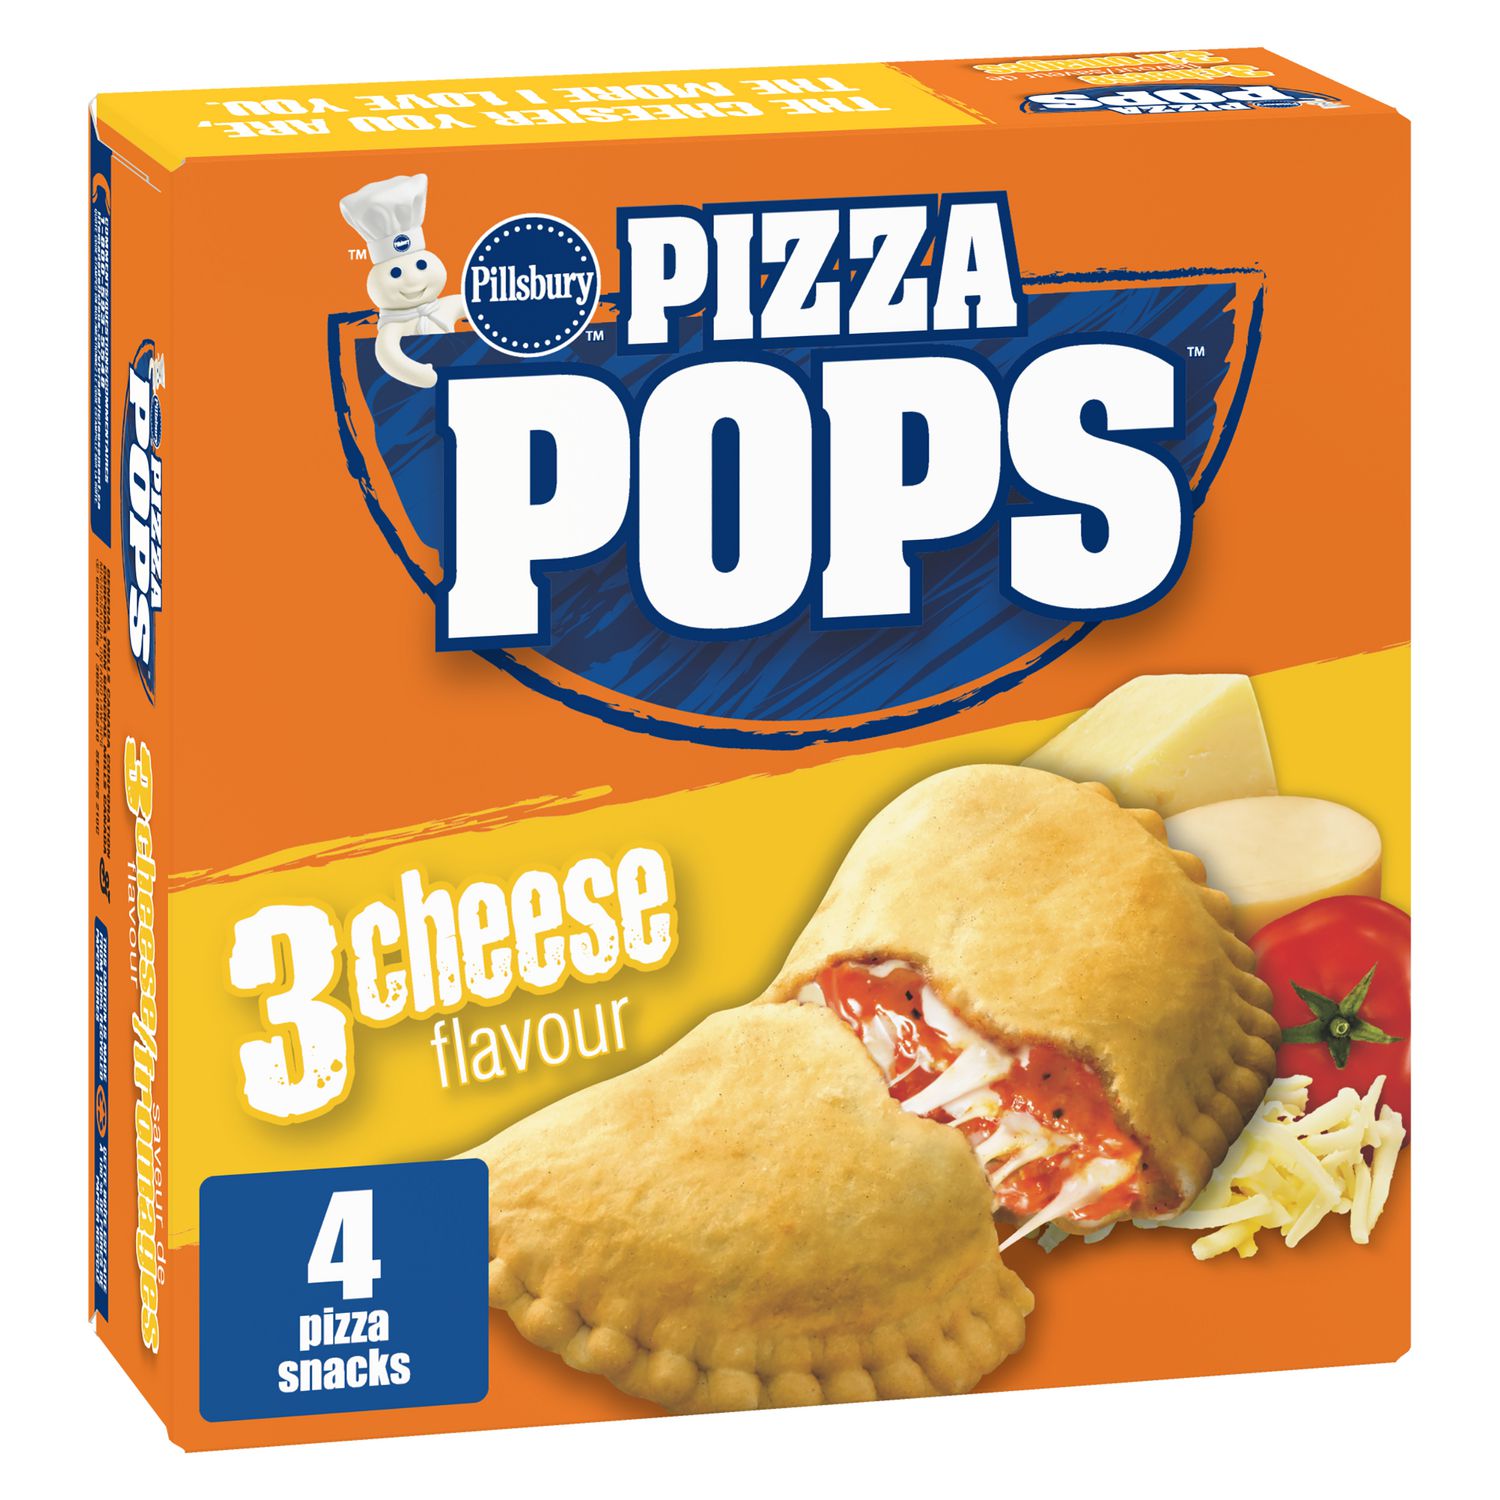 Pizza Pops, 400g Pillsbury x 4